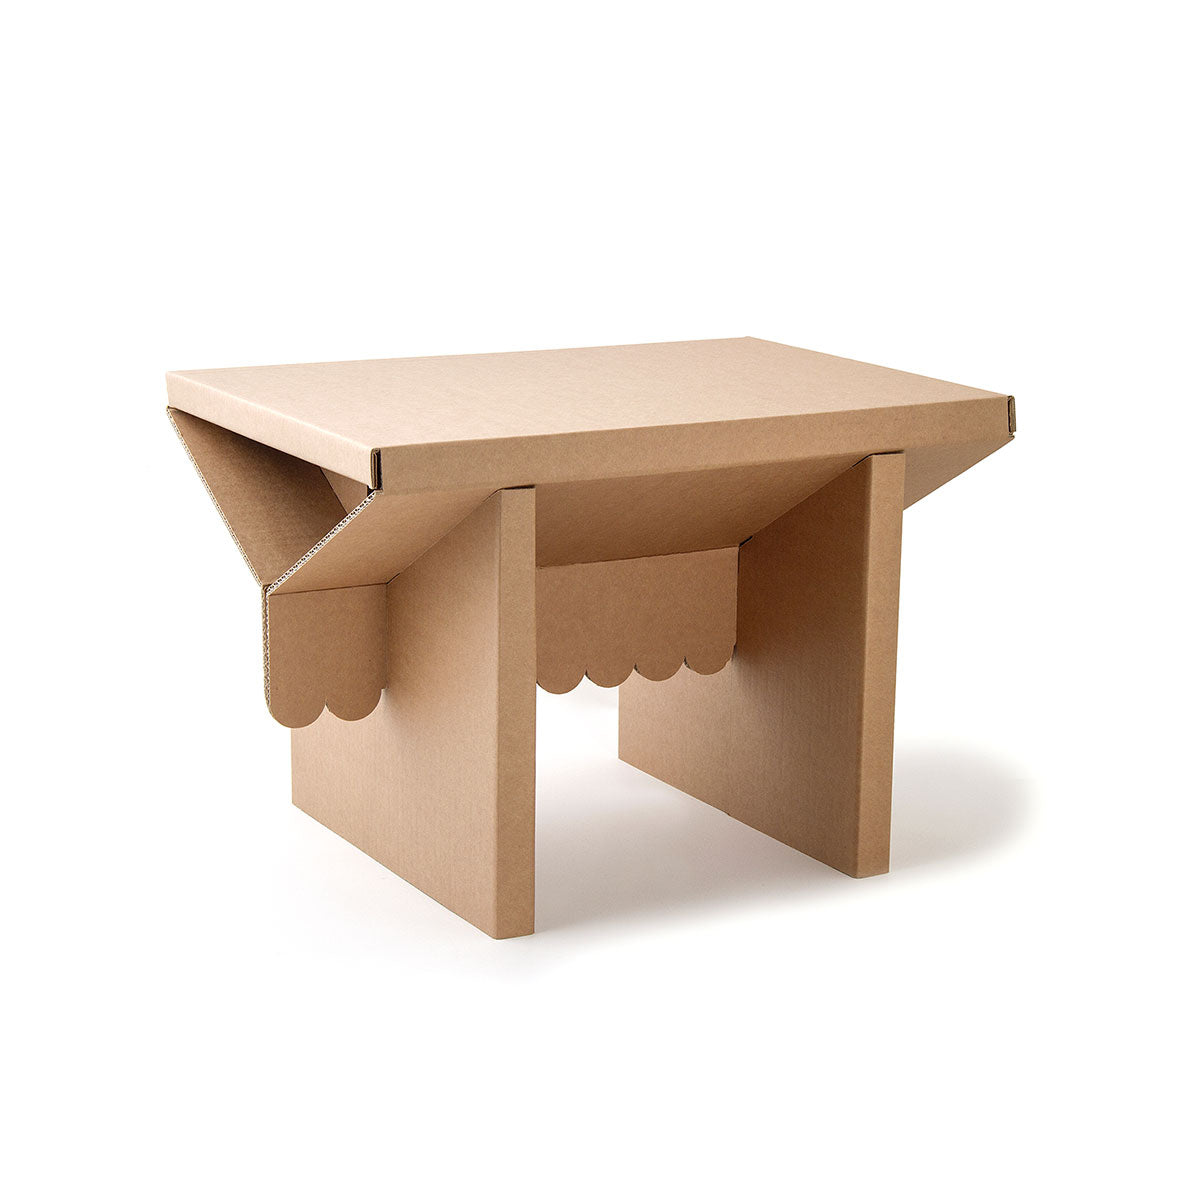 <transcy>Cardboard Table to Build</transcy>